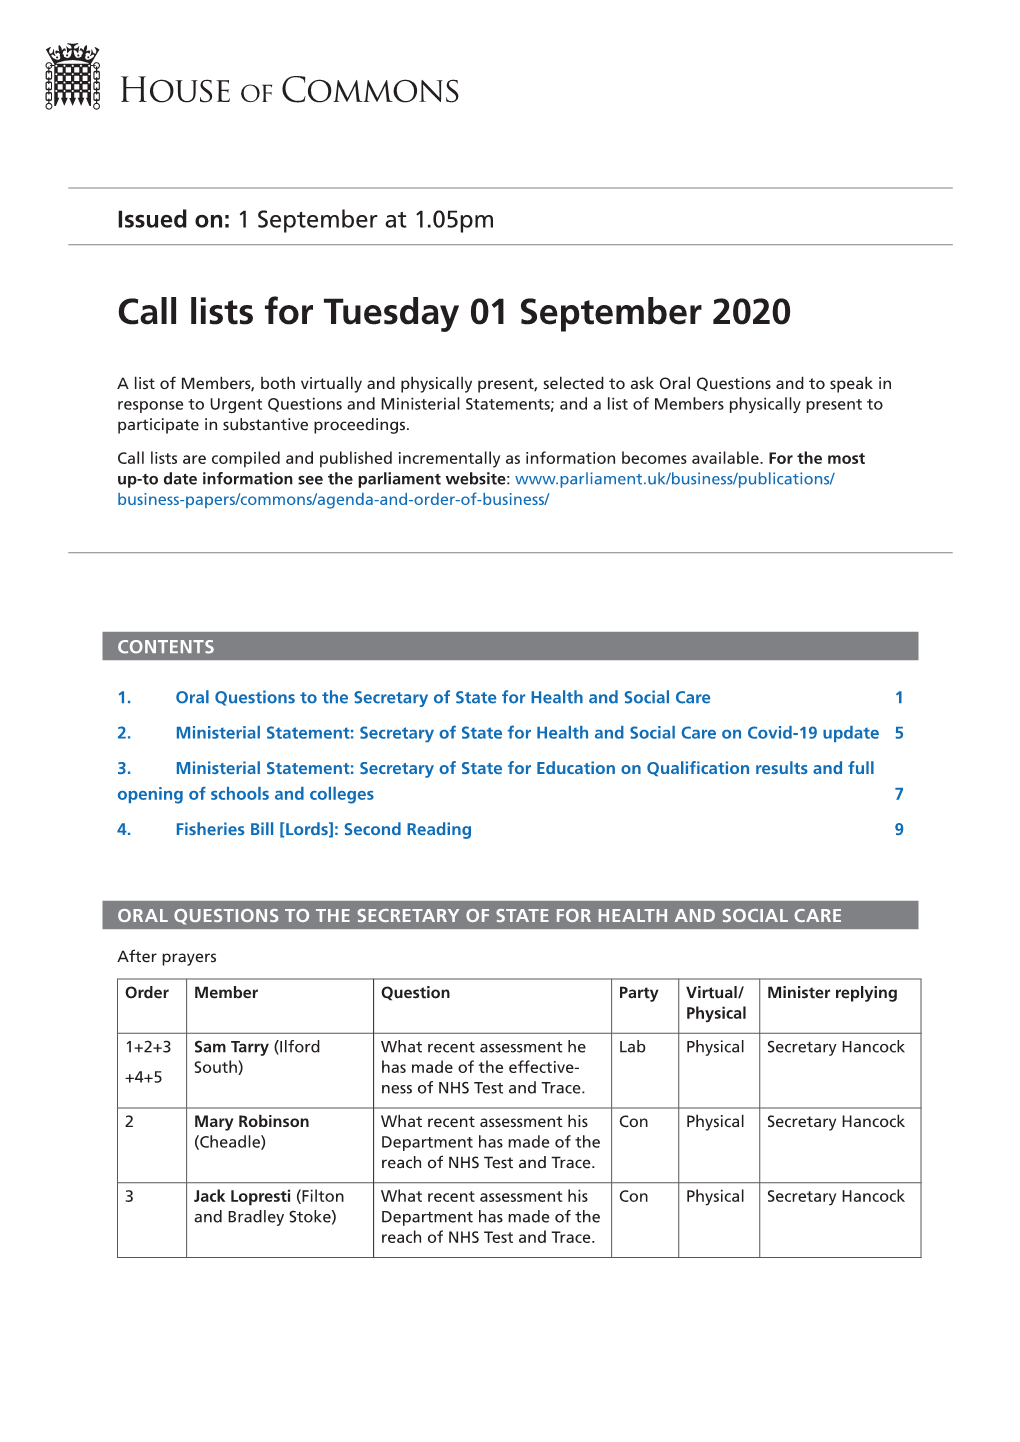 Call List for Tue 01 Sep 2020